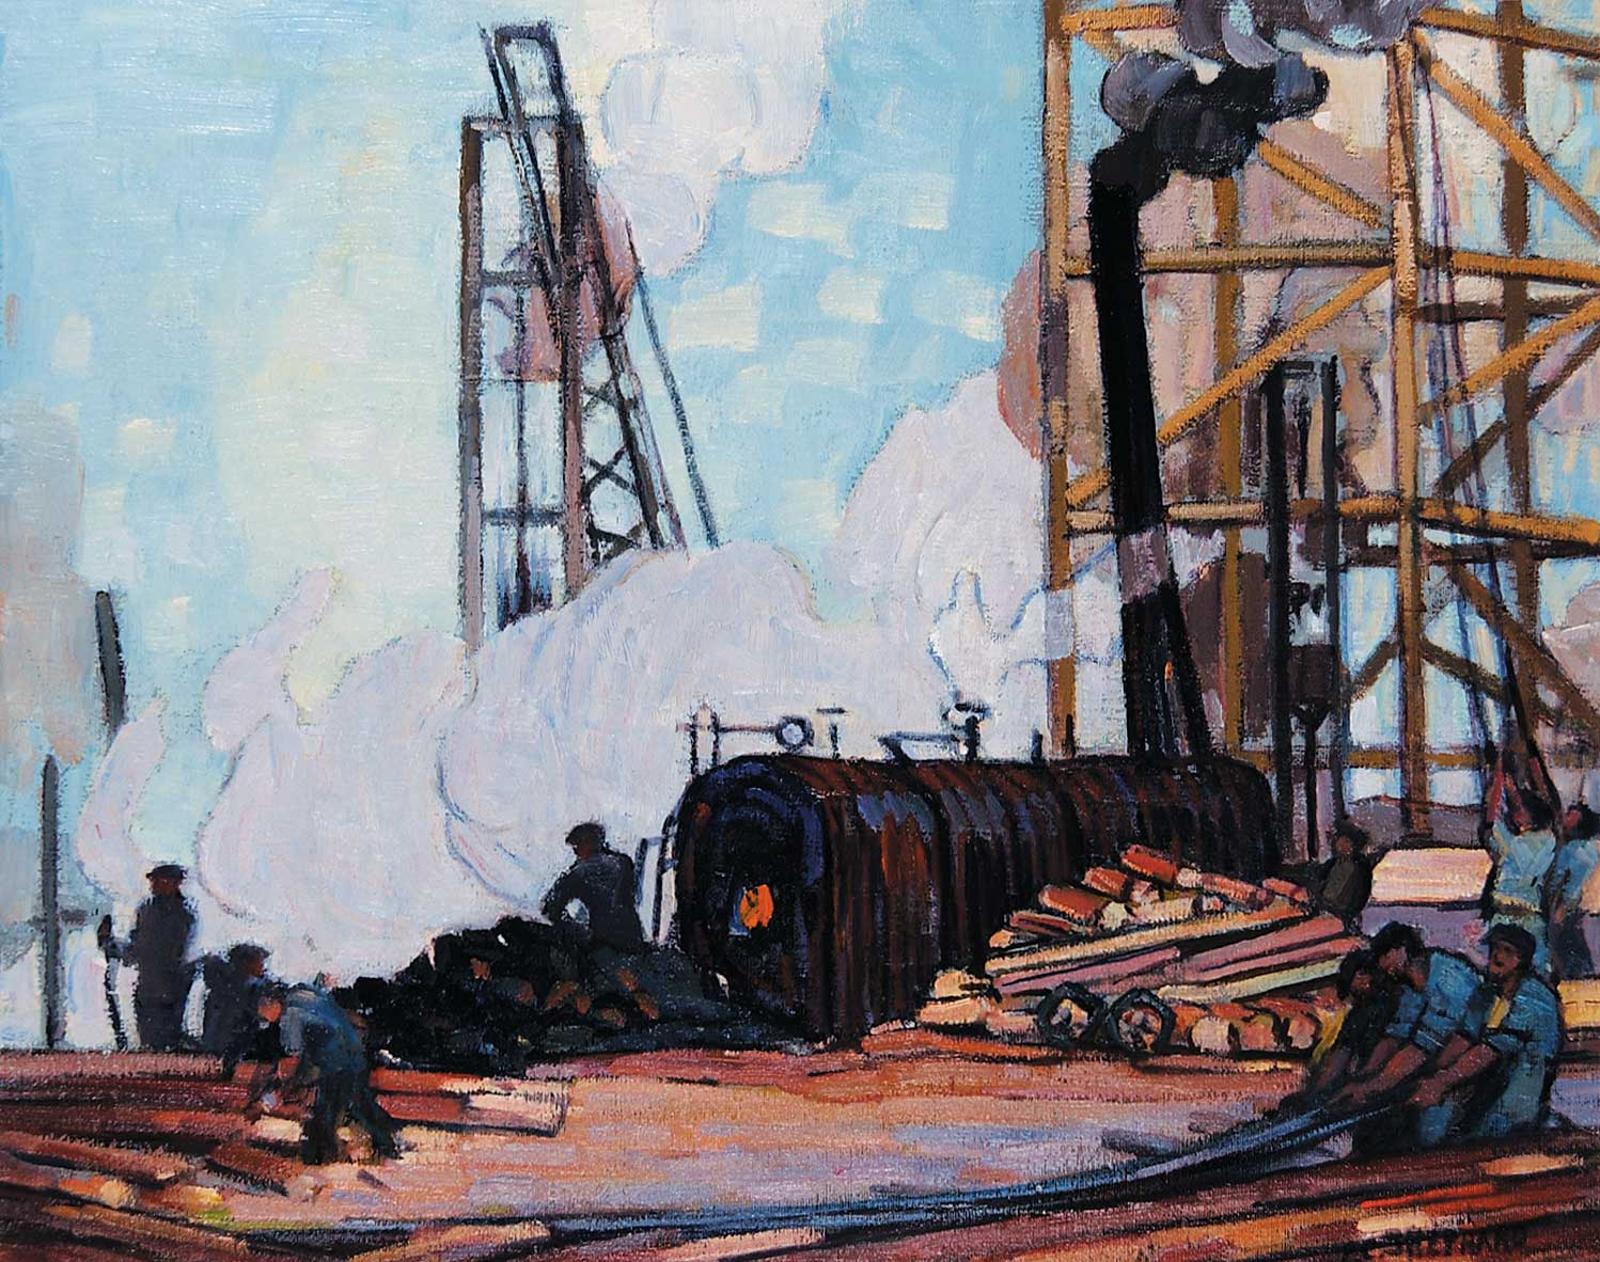 Peter Clapham (P.C.) Sheppard (1882-1965) - Untitled - The Drilling Platform